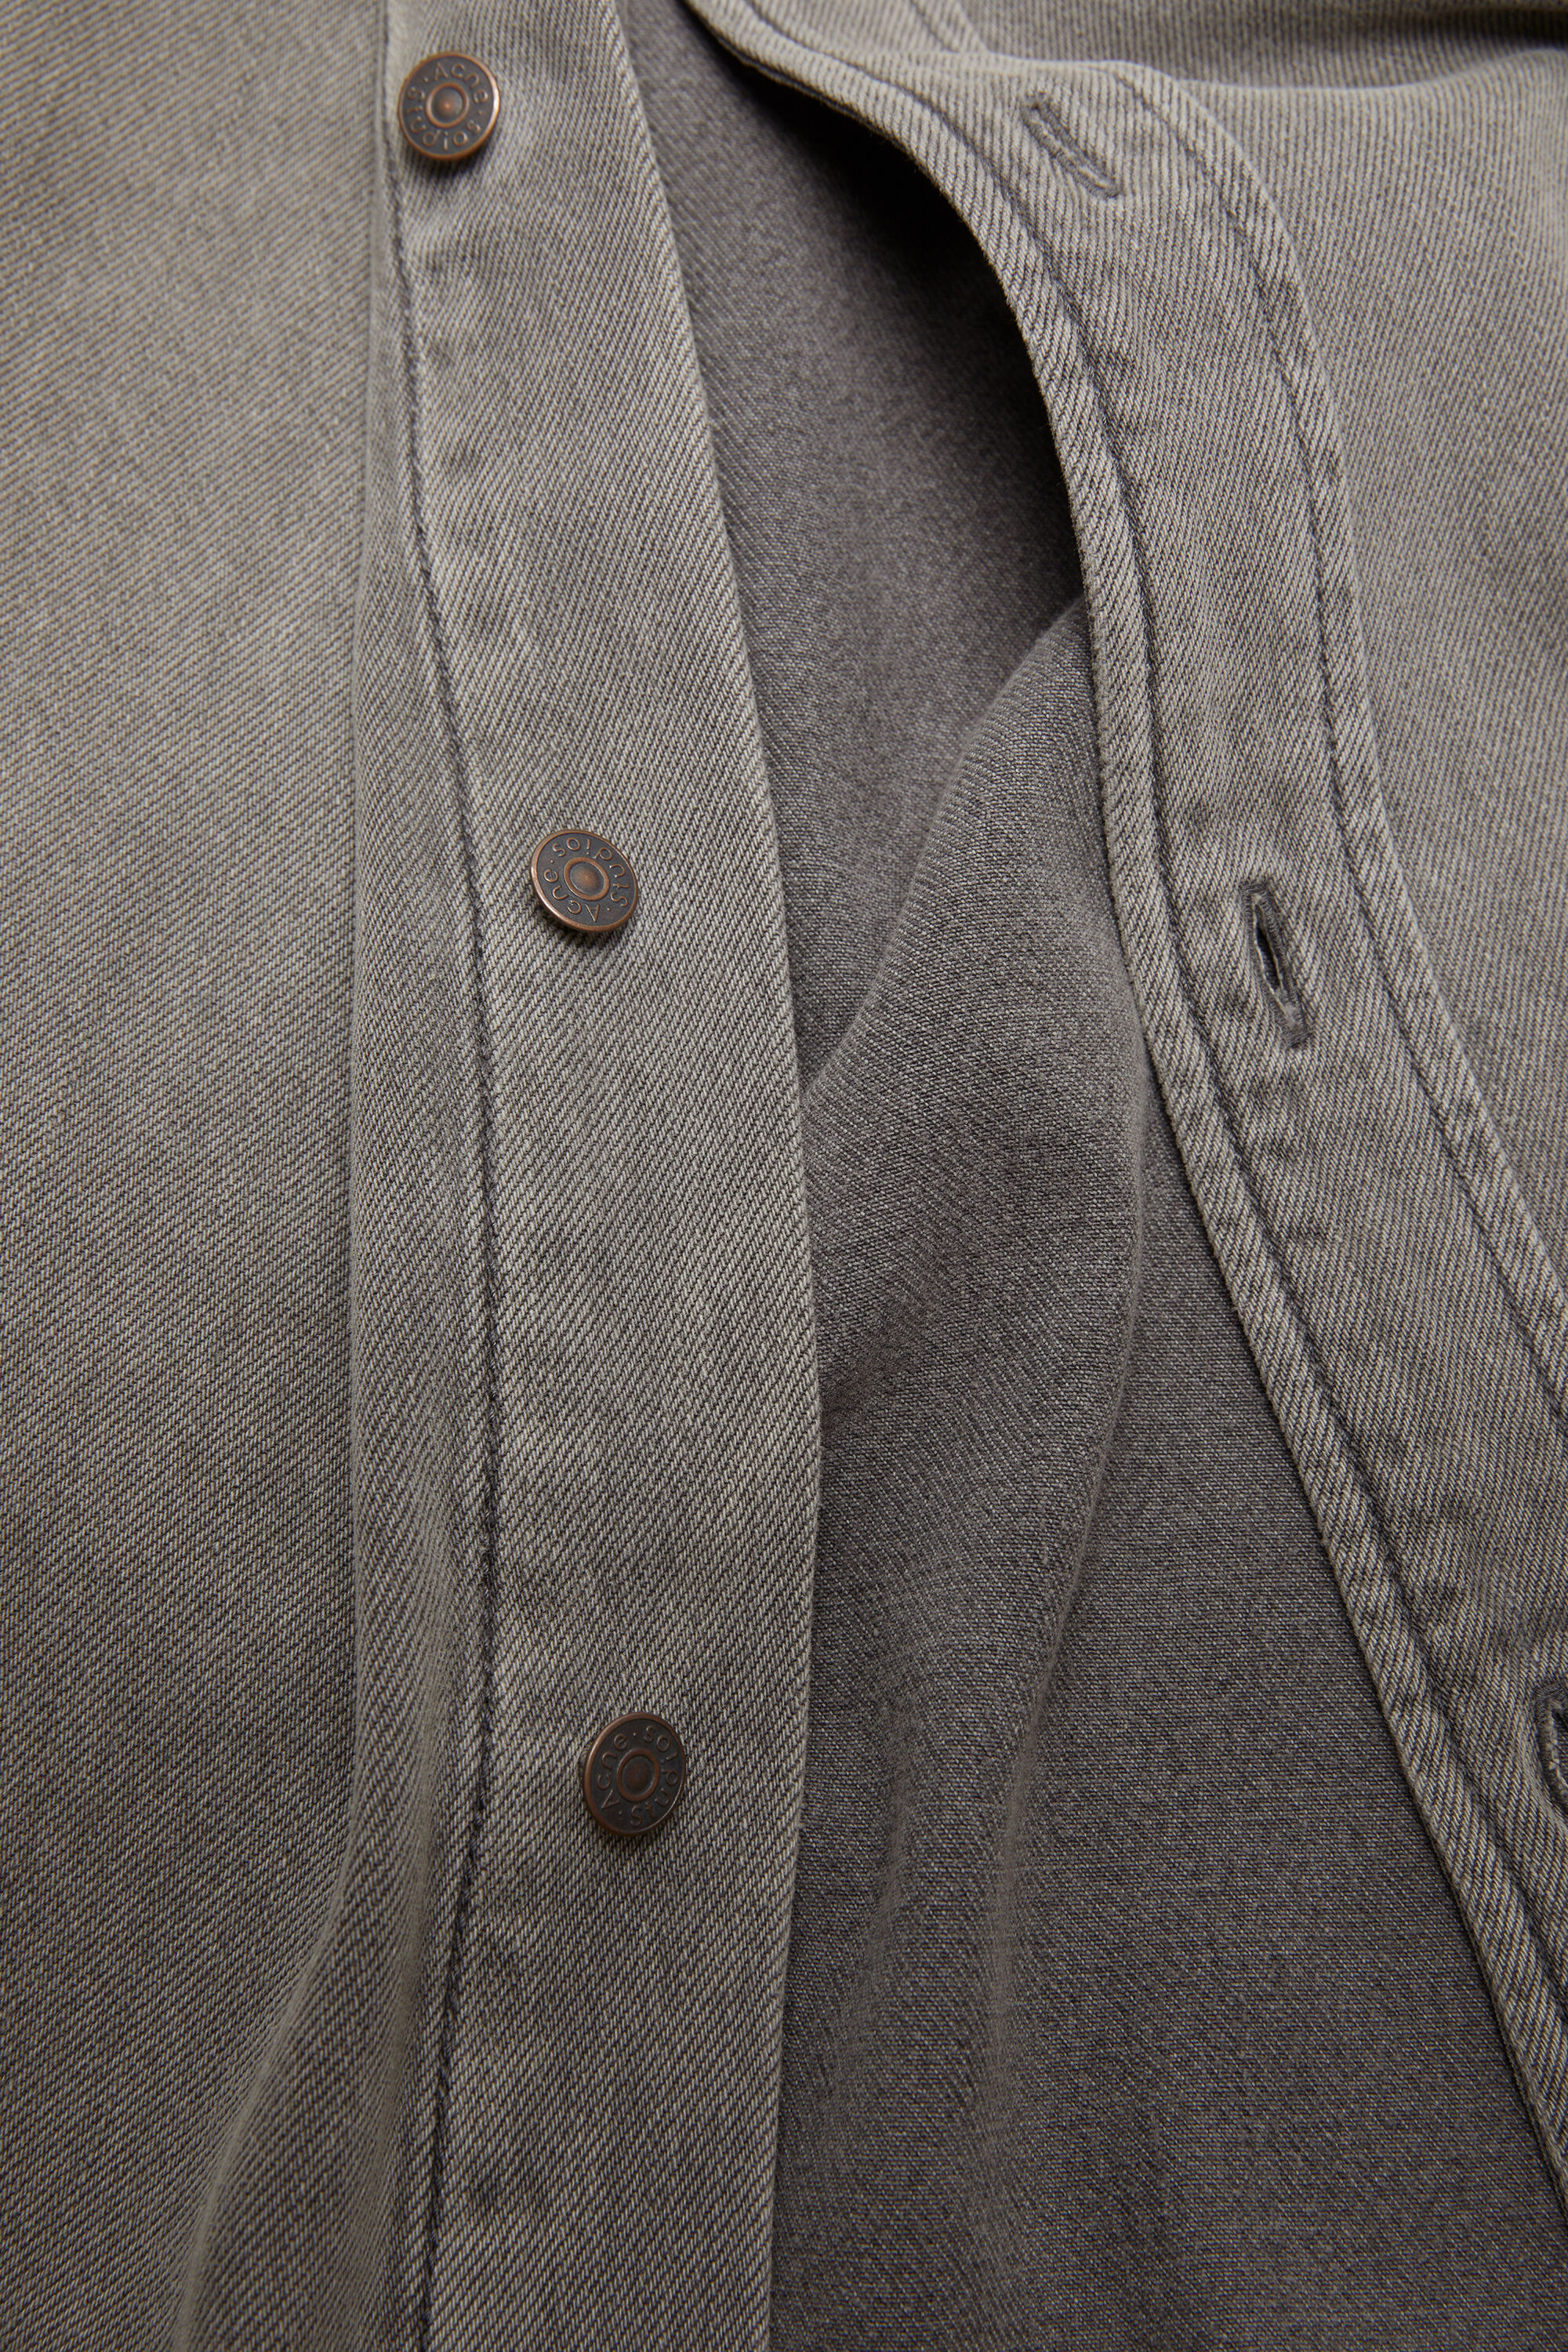 Acne Studios - Denim shirt - Loose fit - Anthracite grey